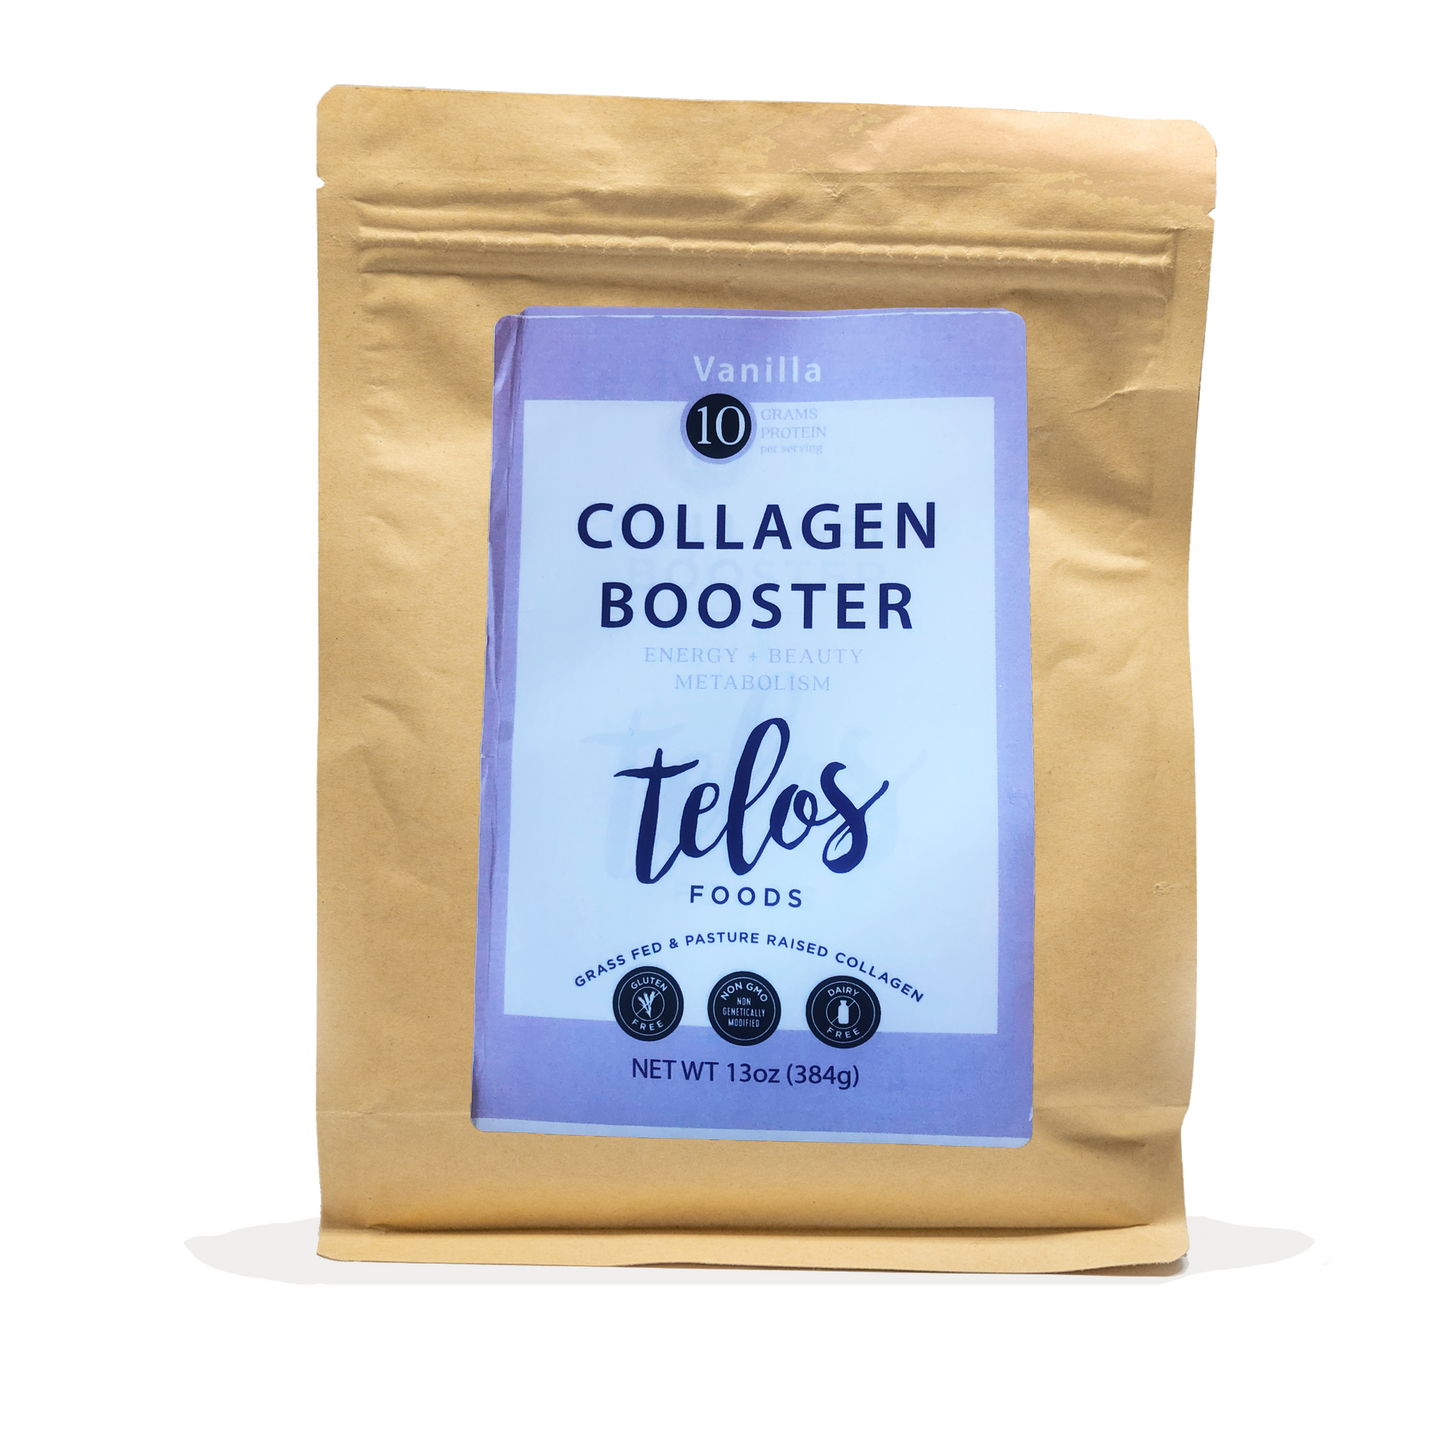 Collagen Booster - Vanilla (16 Servings Bulk)